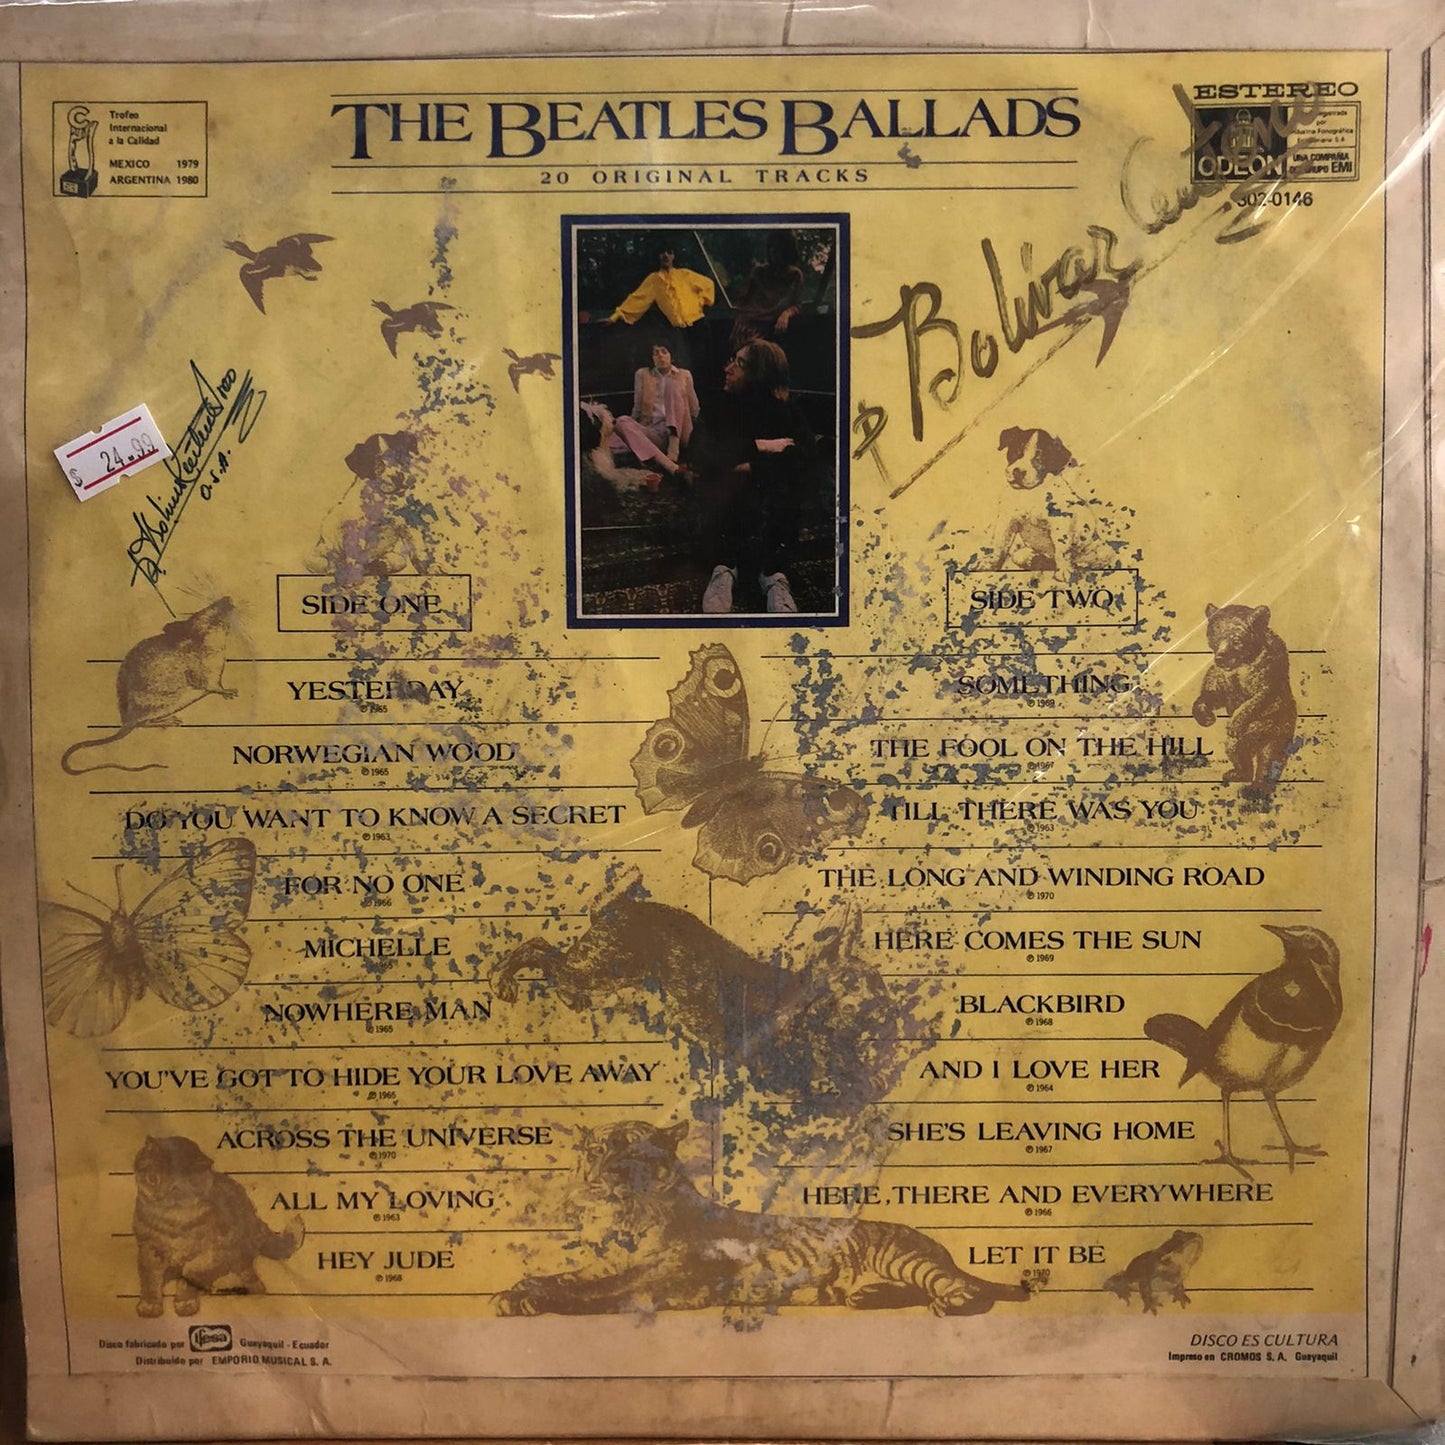 THE BEATLES - BALLADS 20 ORIGINAL TRACKS LP